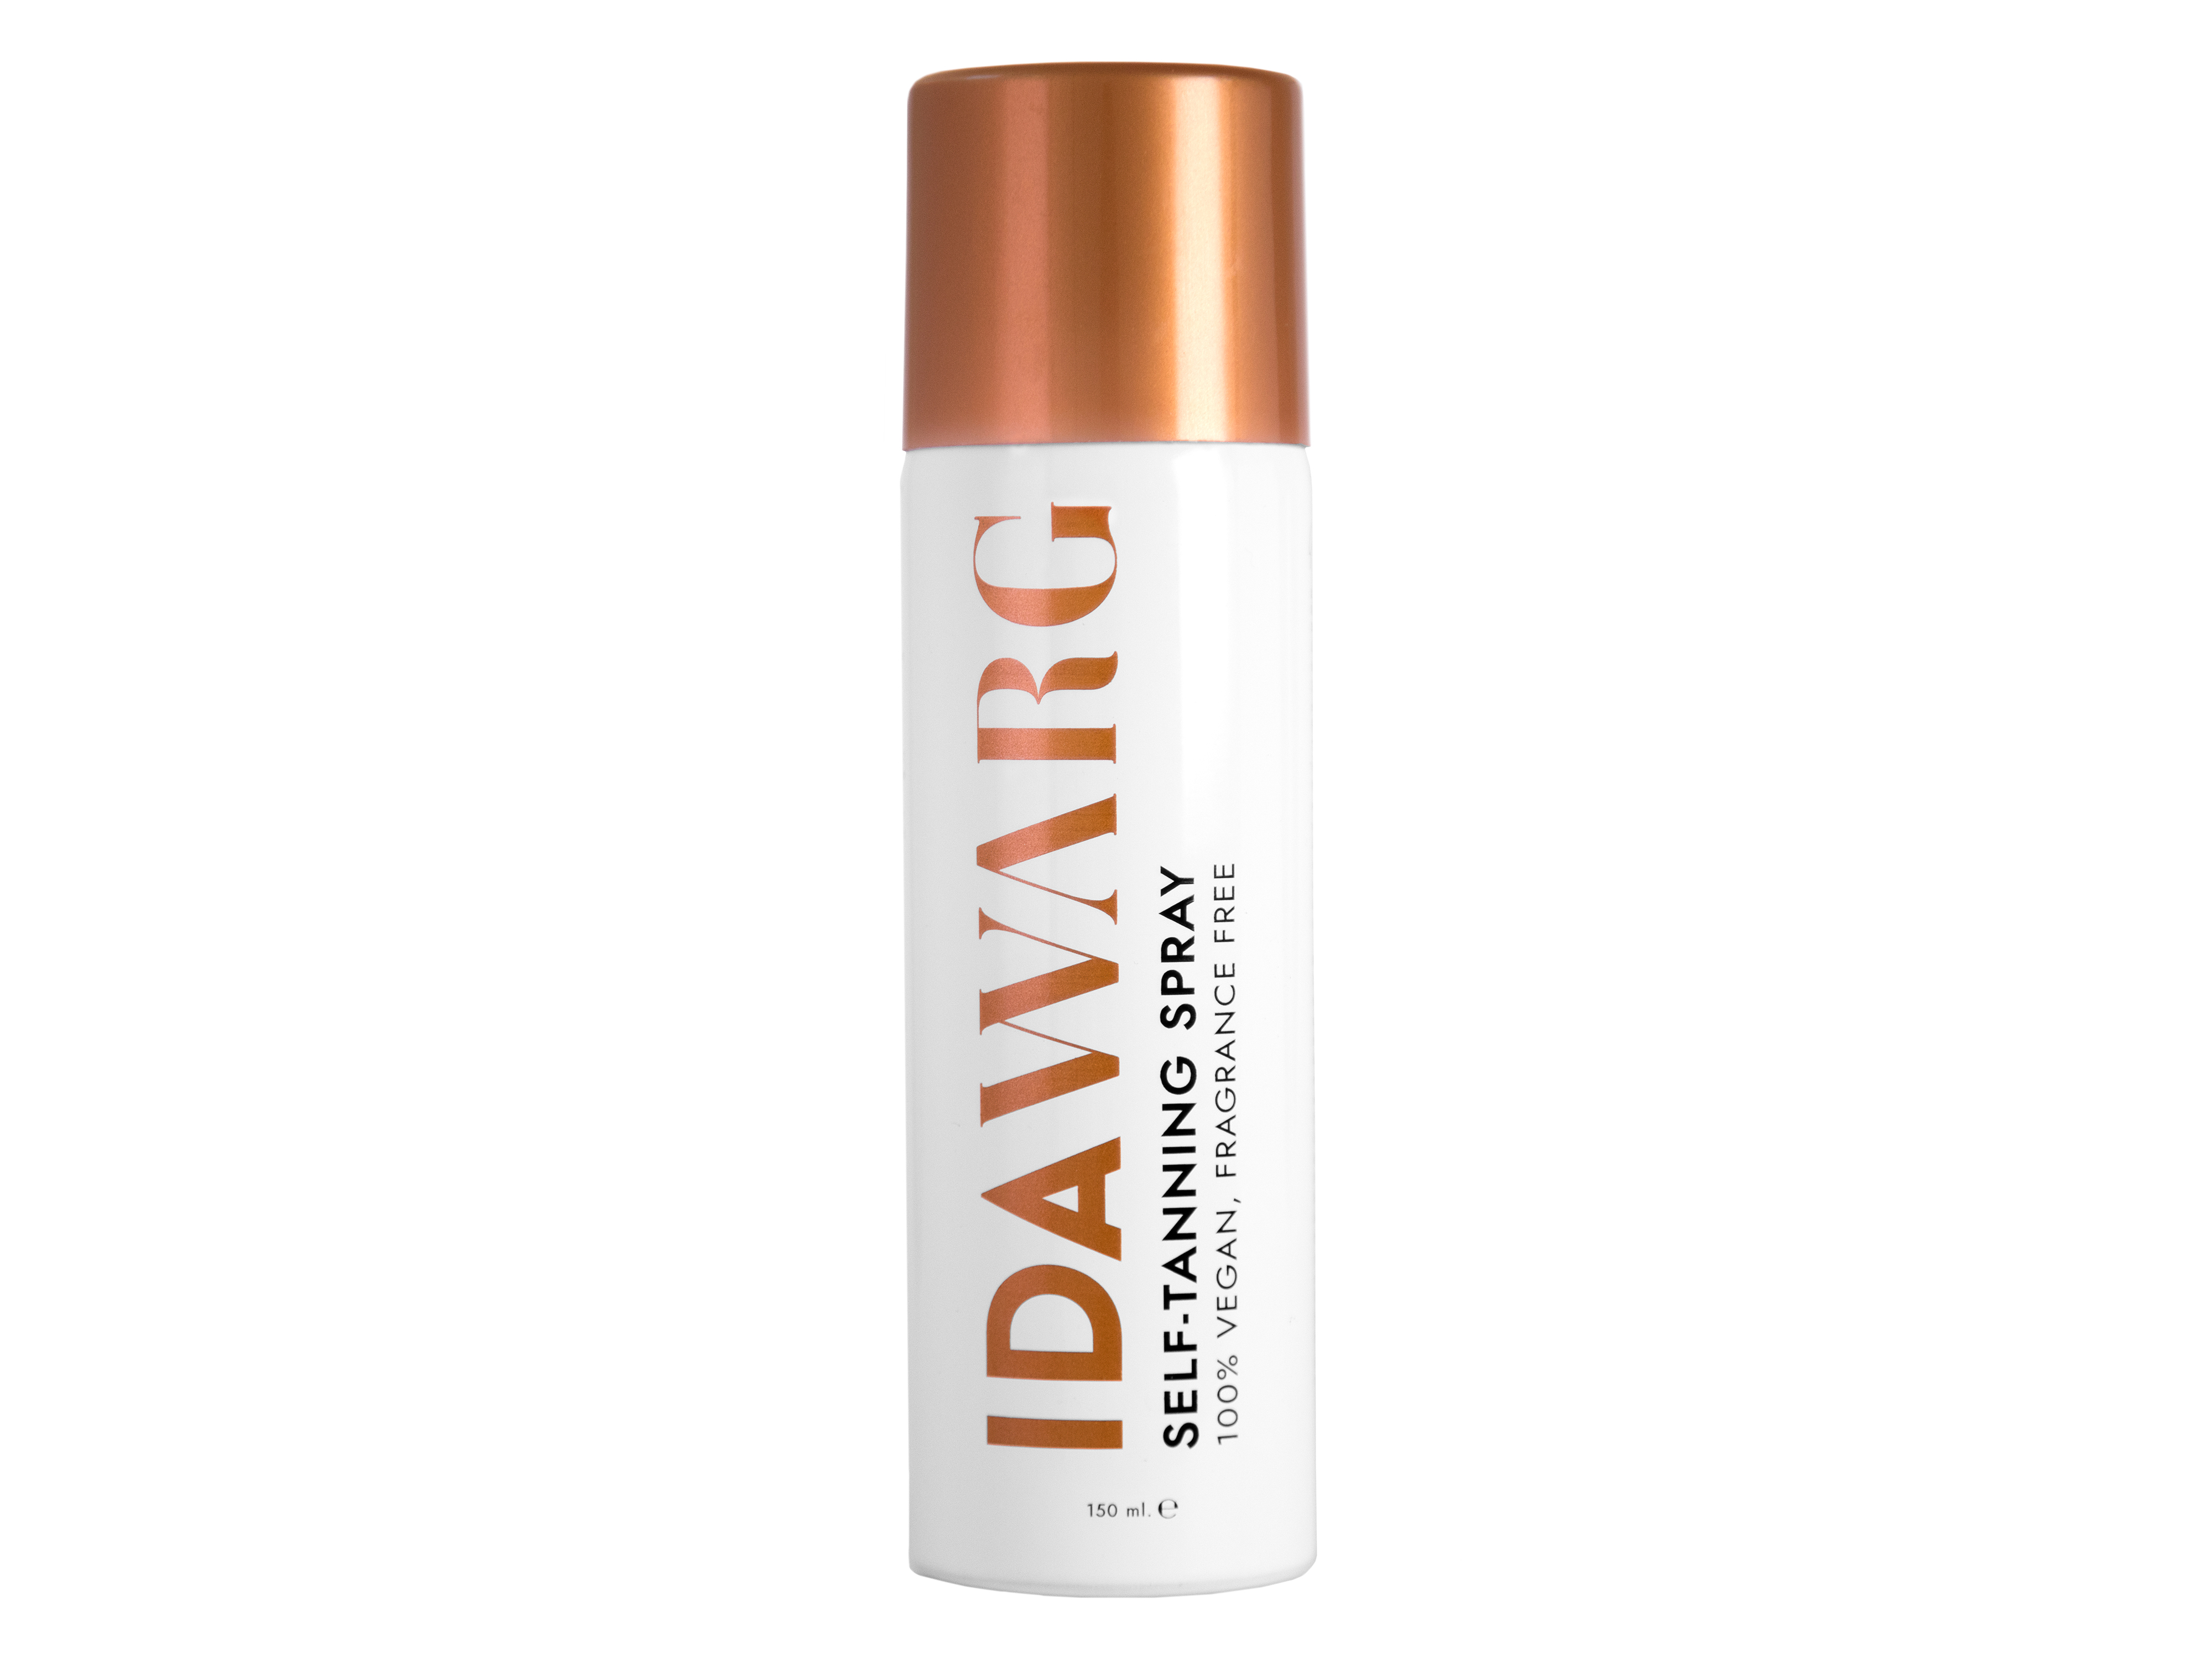 Ida Warg Beauty Self-Tanning Spray, 150 ml